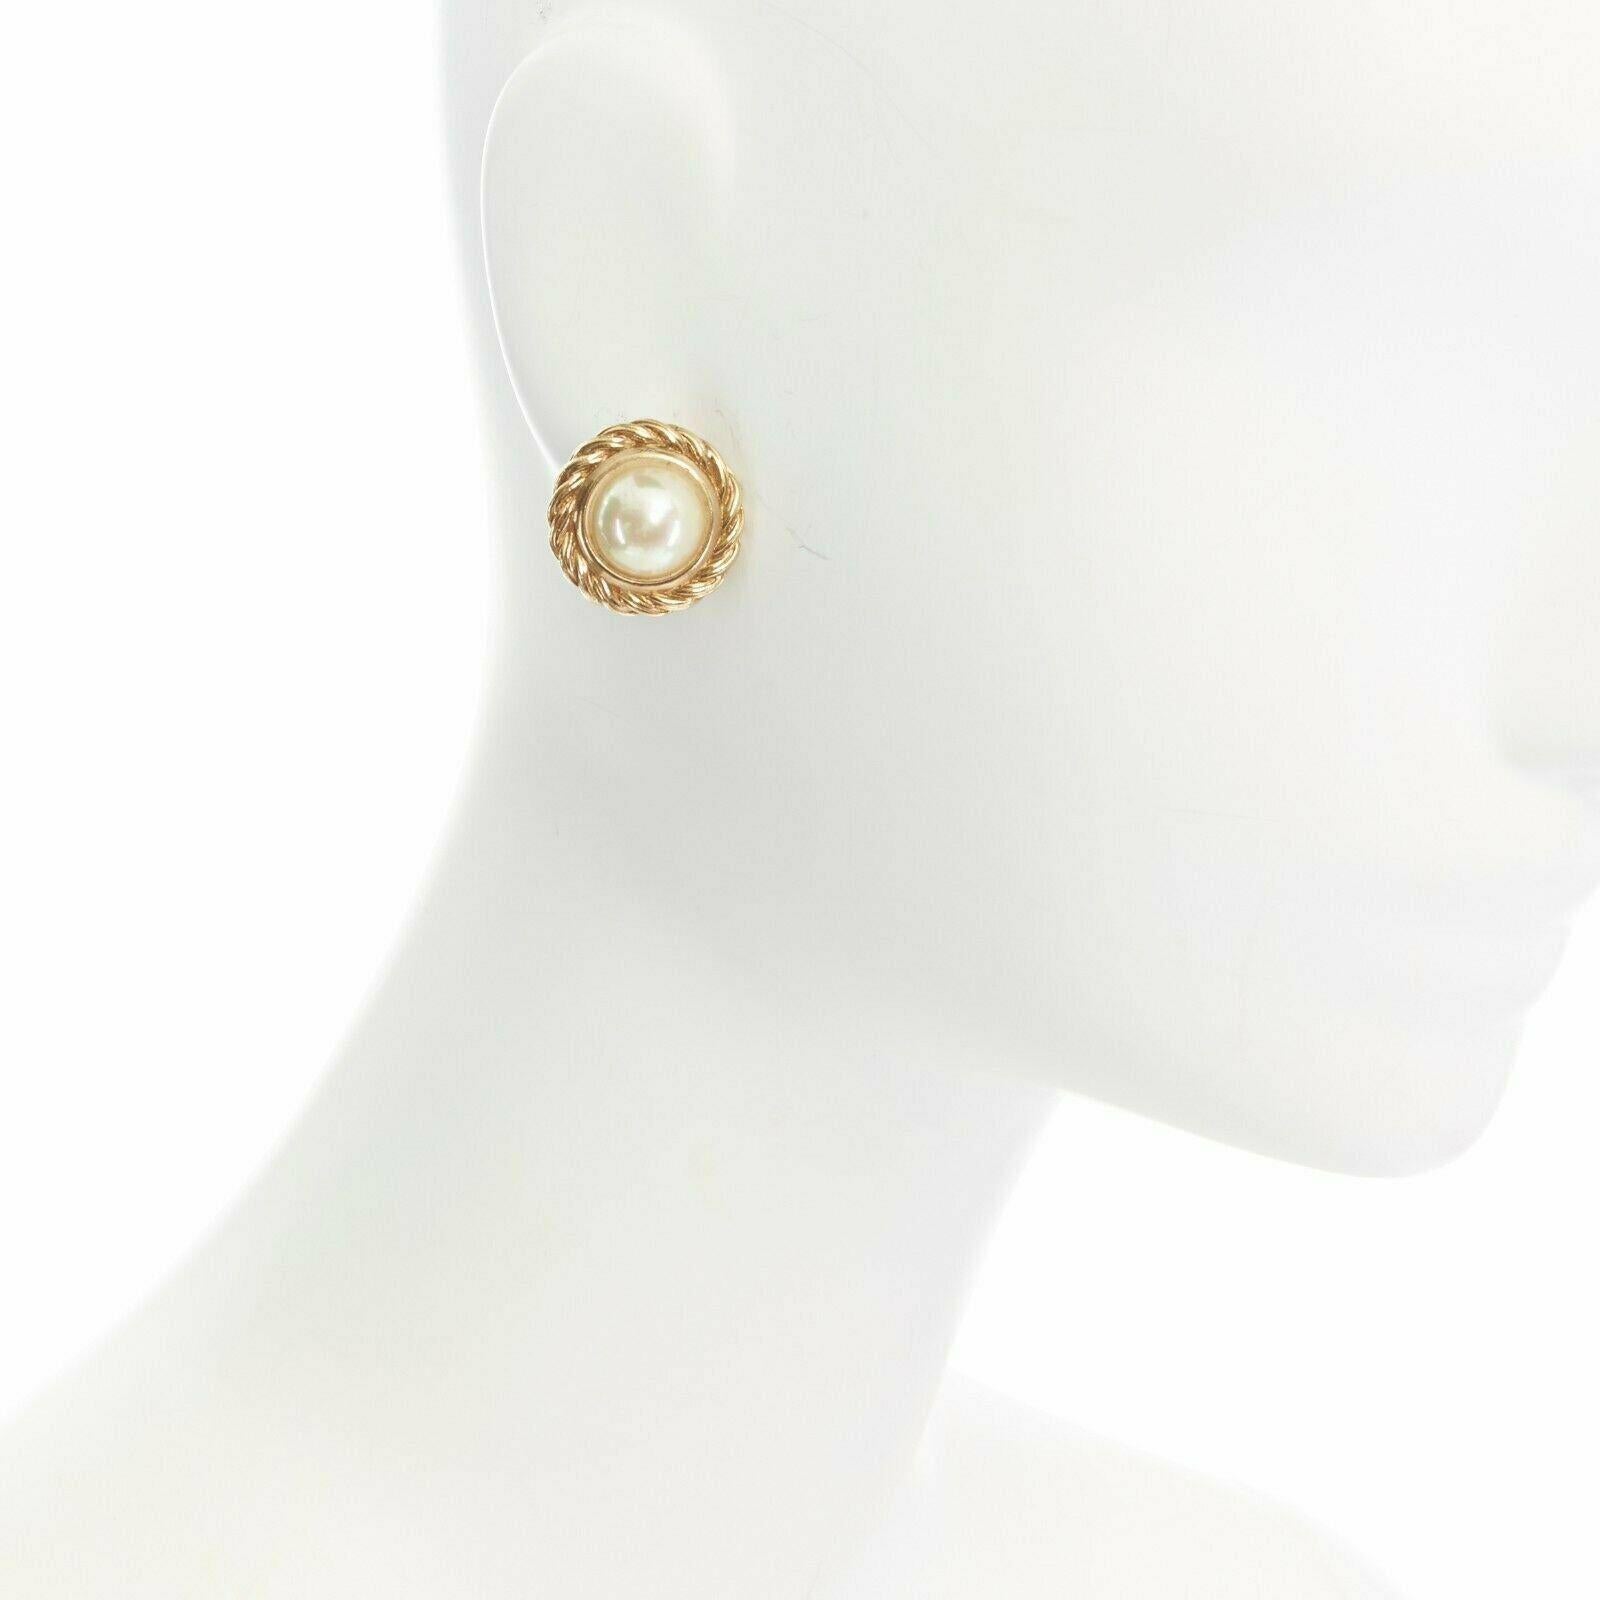 PIADORO Vintage Goldfarbene Barock-Clip-On-Ohrringe mit Perlenkreis Damen